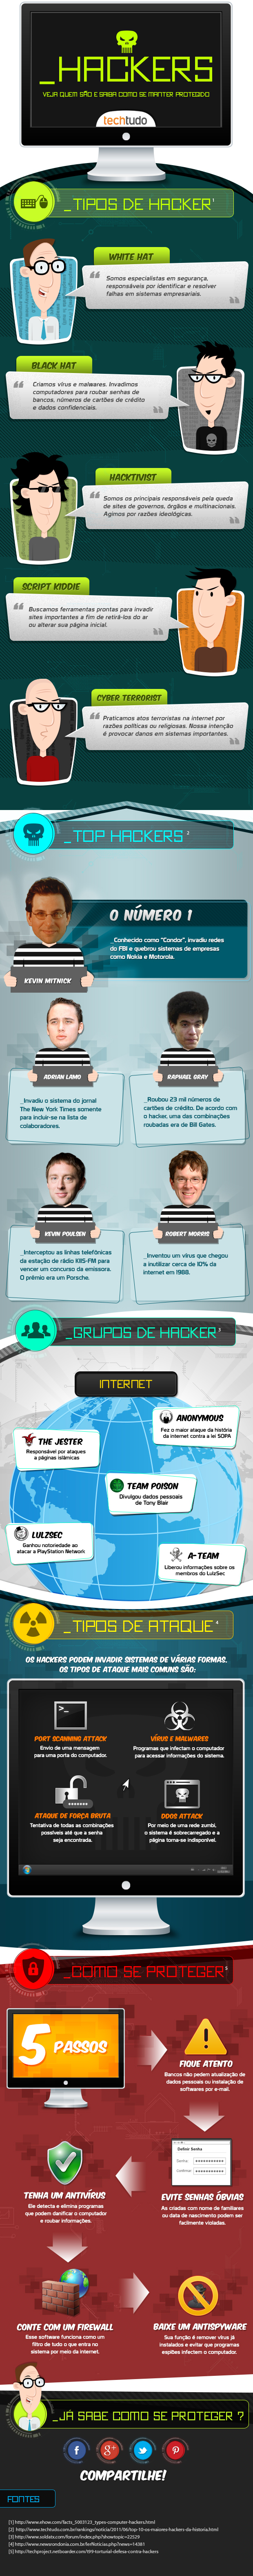 Existem diferentes tipos ataques de hackers, descubra como se previnir (Foto: Techtudo)